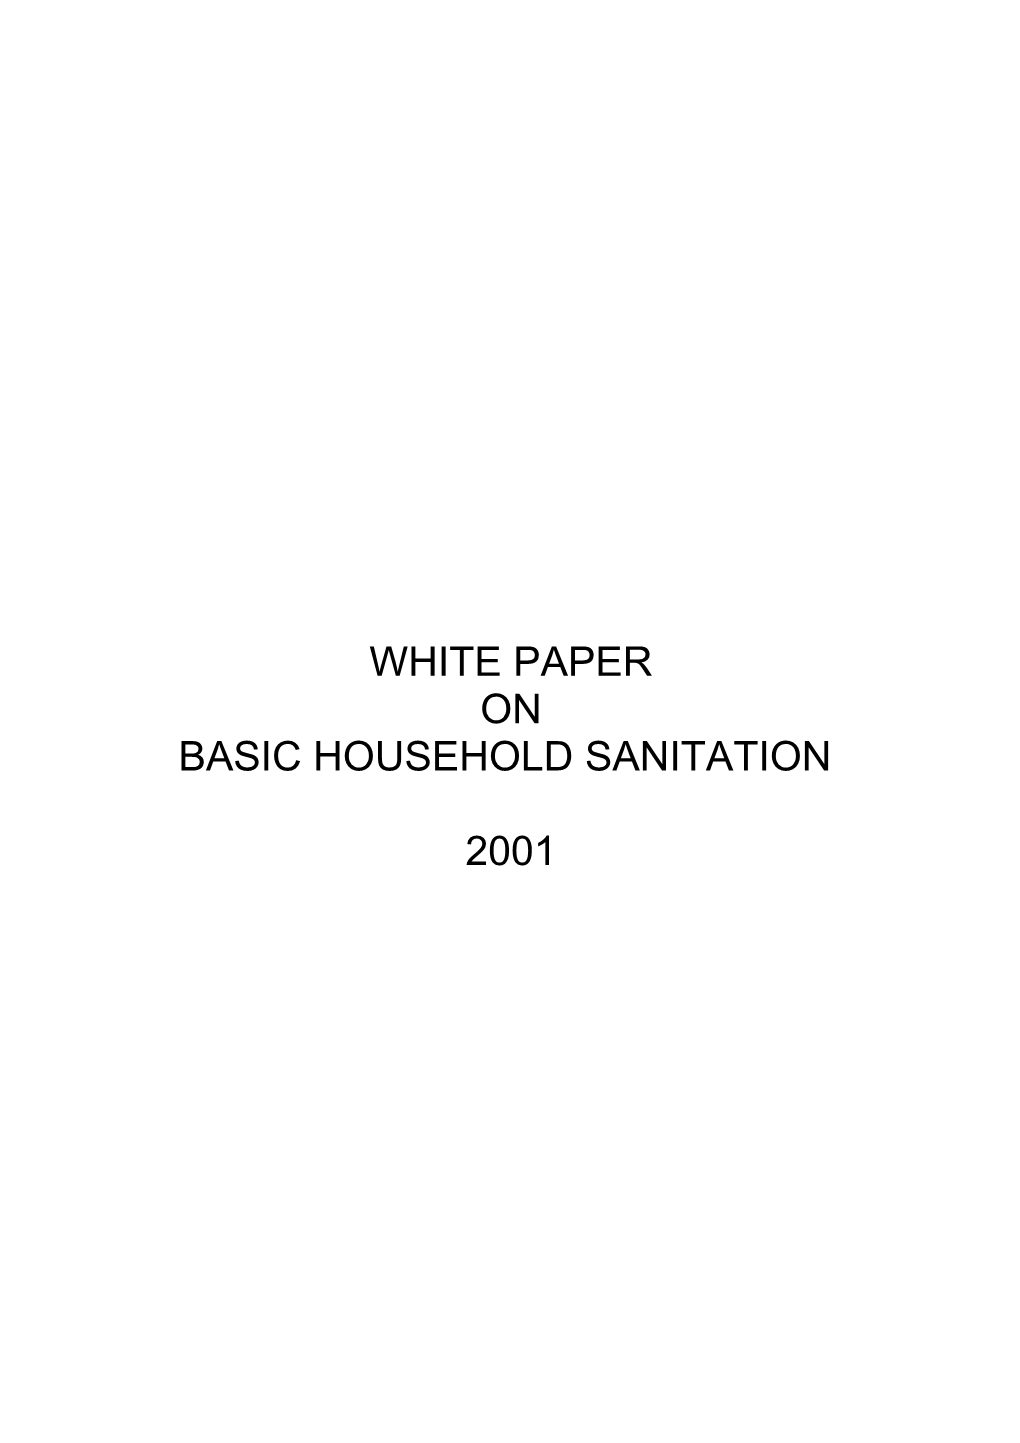 Basic Household Sanitation